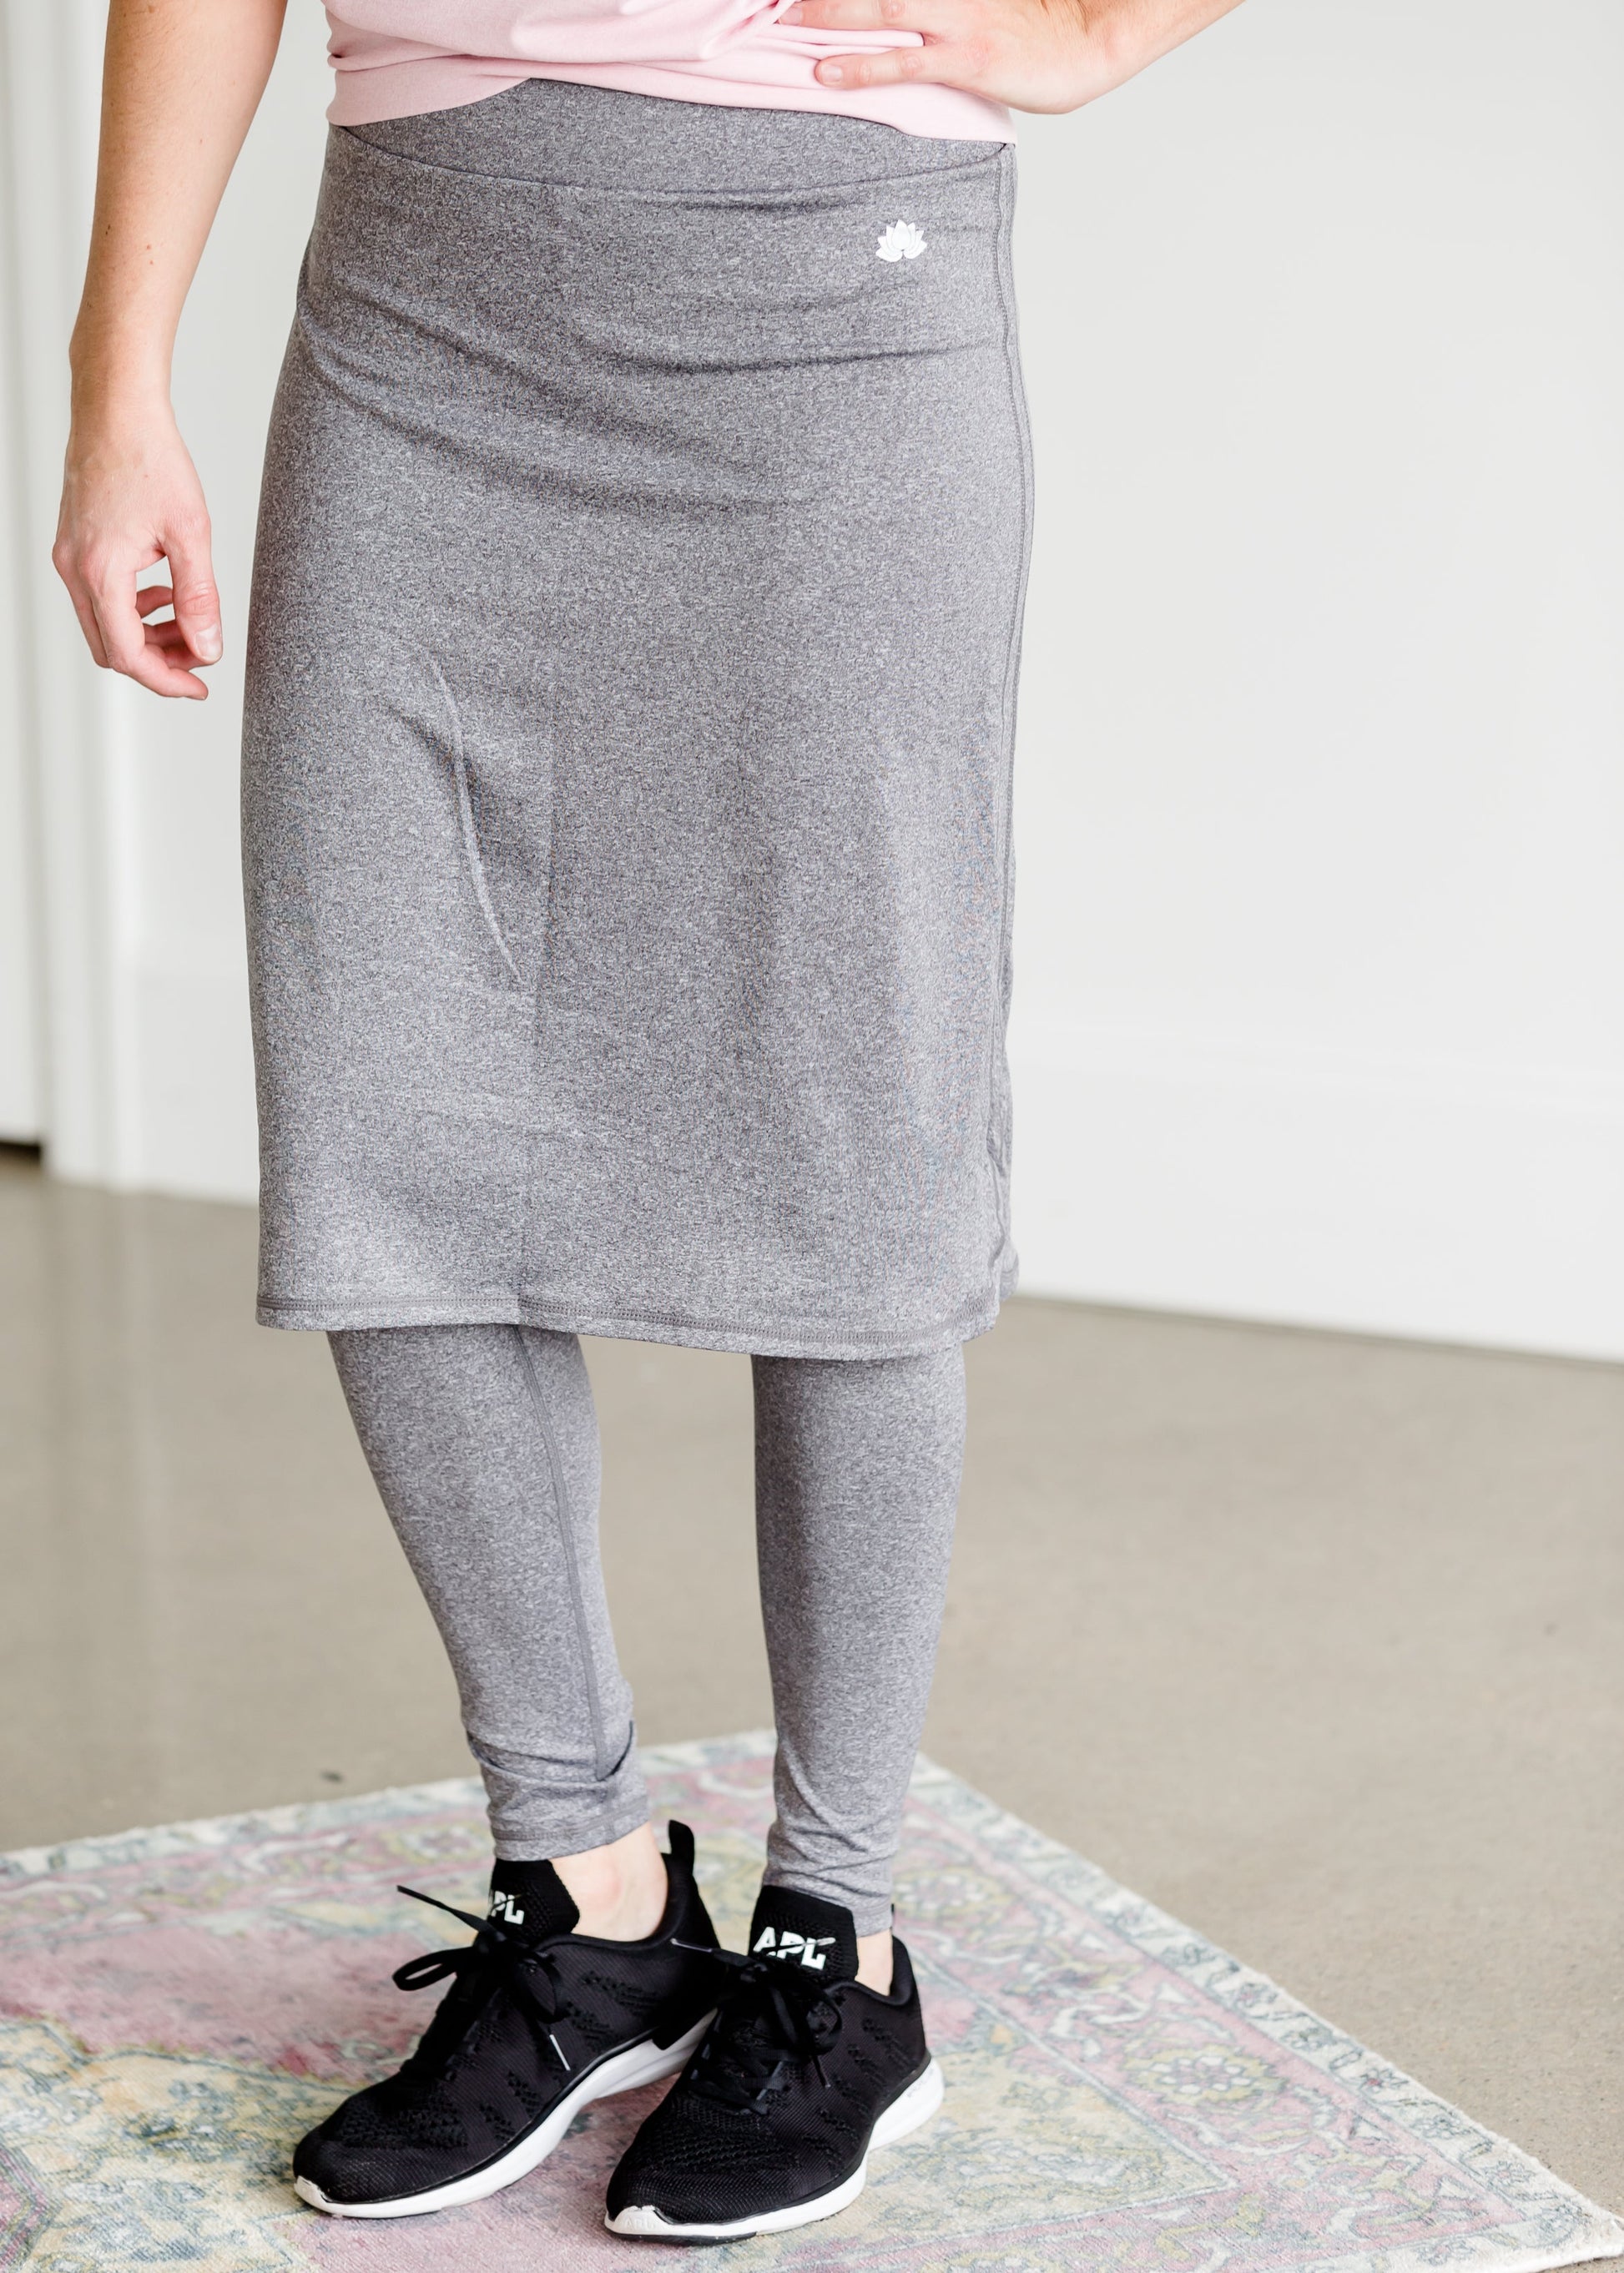 Snoga Long Shirttail Heather Gray Sport Skirt - FINAL SALE